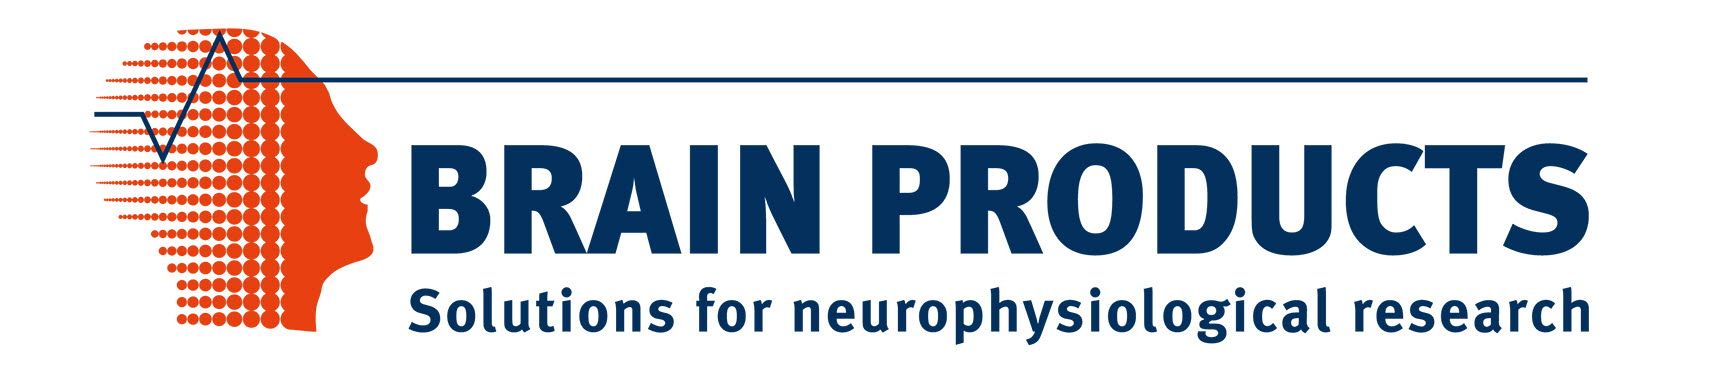 Brain products logo